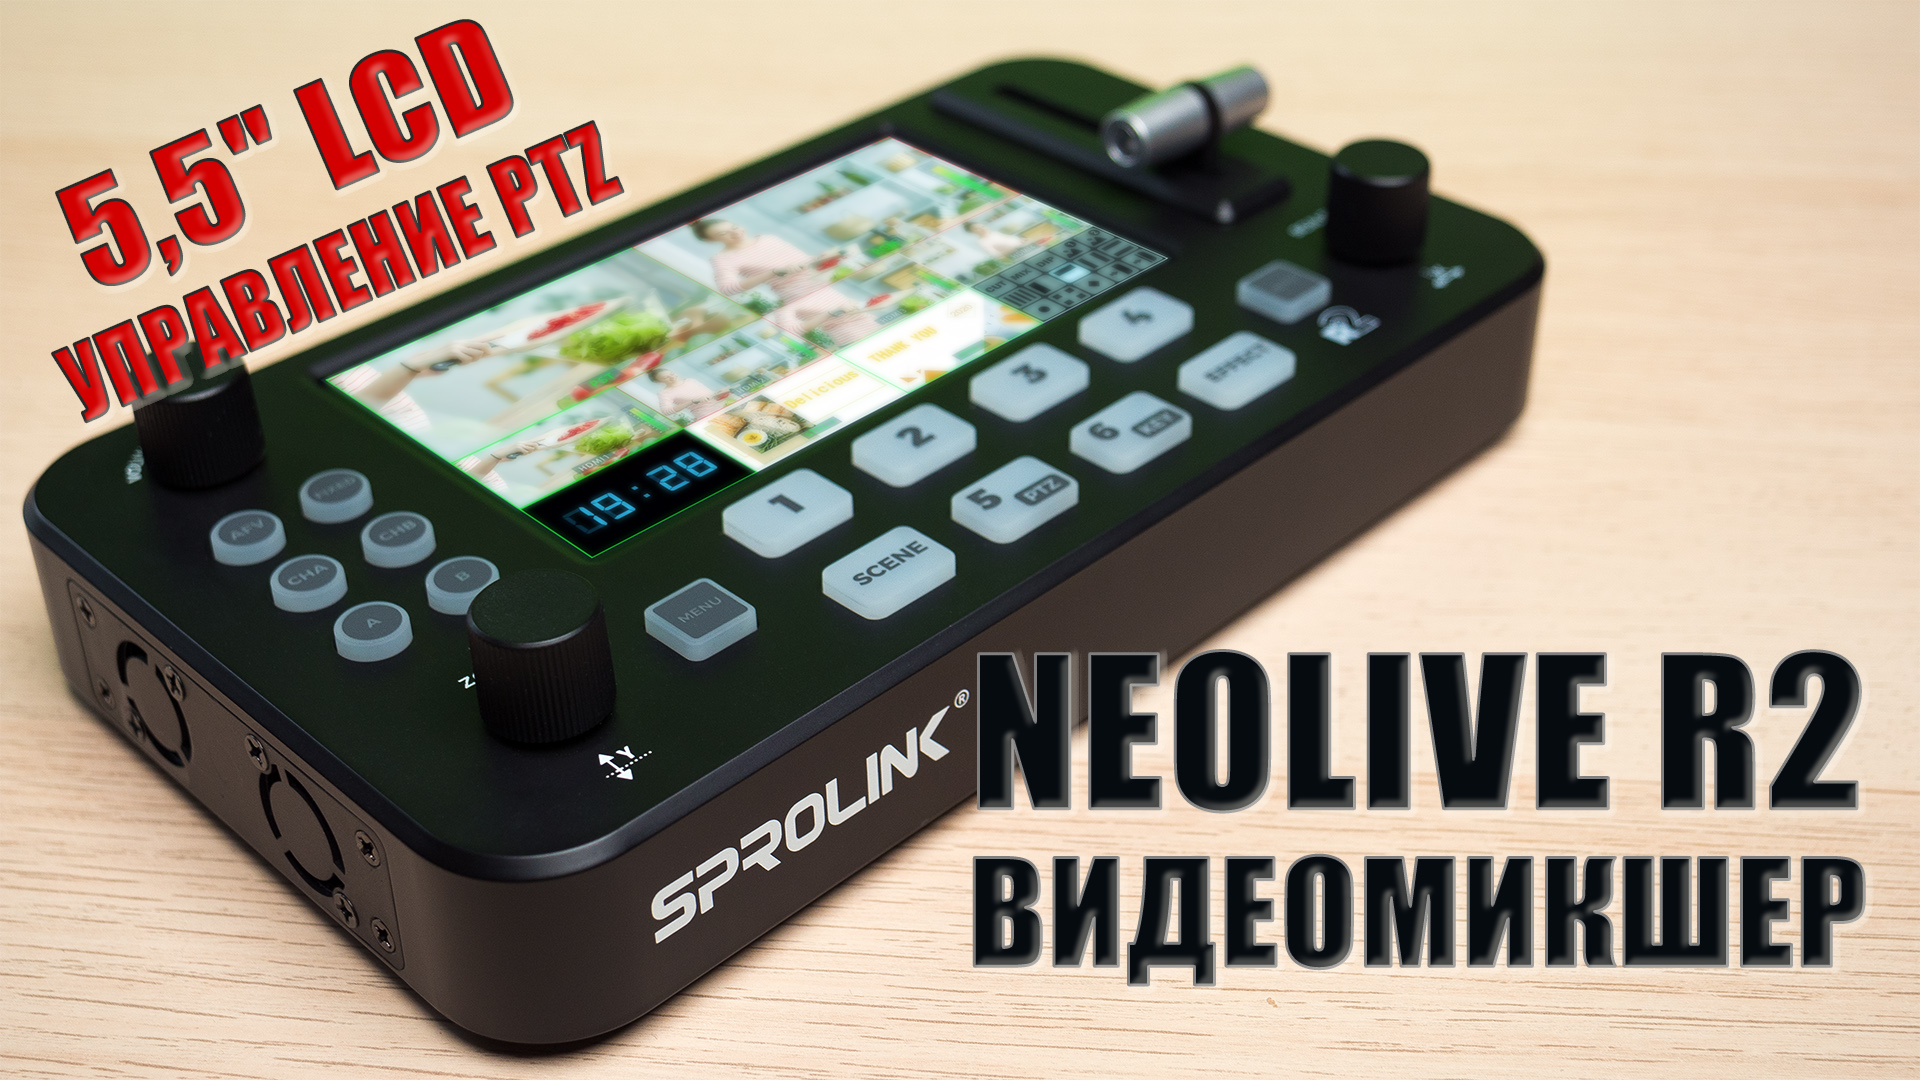 SPROLINK NeoLIVE R2 | Детальный обзор видеомикшера | 5.5" LCD, 4 HDMI IN, PTZ, Chroma Key